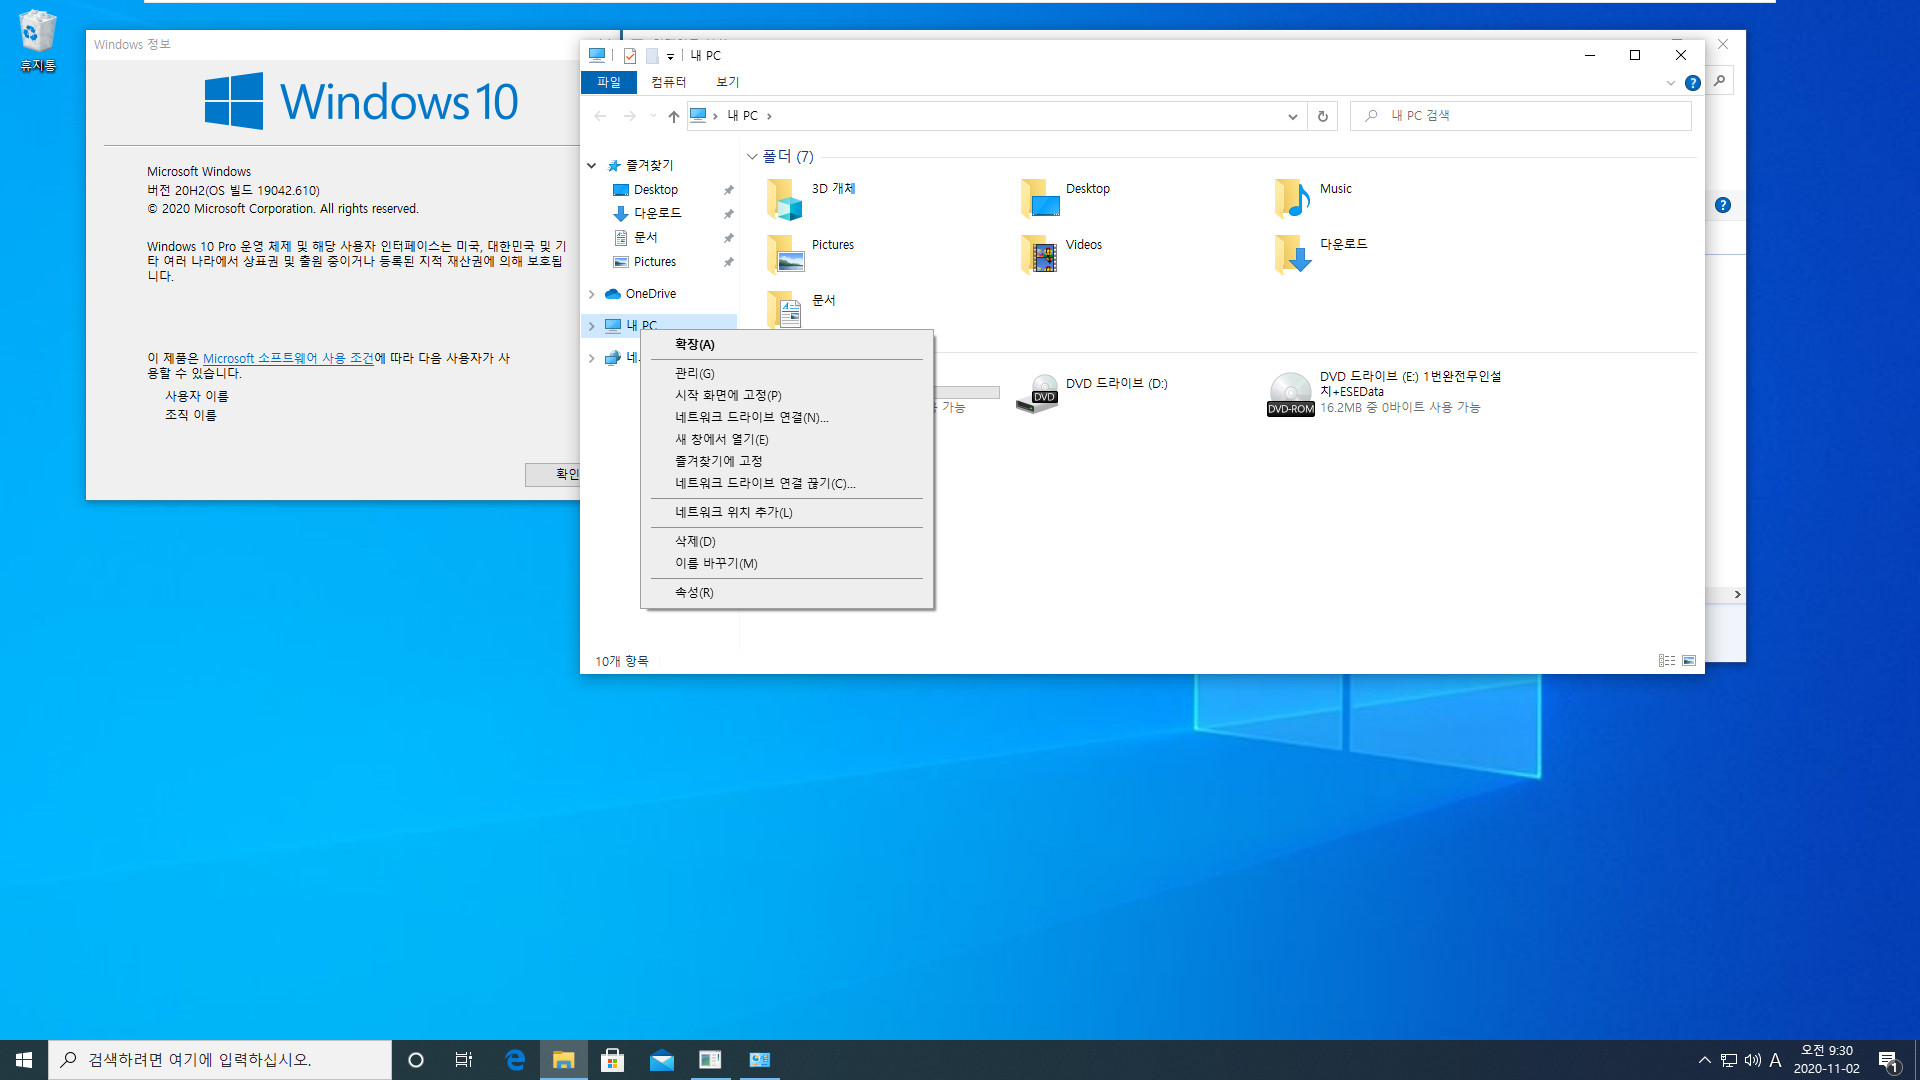 Windows 10 버전 20H2 기능 업데이트 KB4562830 폴더의 mum 파일들만 찾아서 설치하기.bat - 크로미엄 엣지 설치하지 않고 버전 20H2만 설치하기 테스트 2020-11-02_093042.jpg